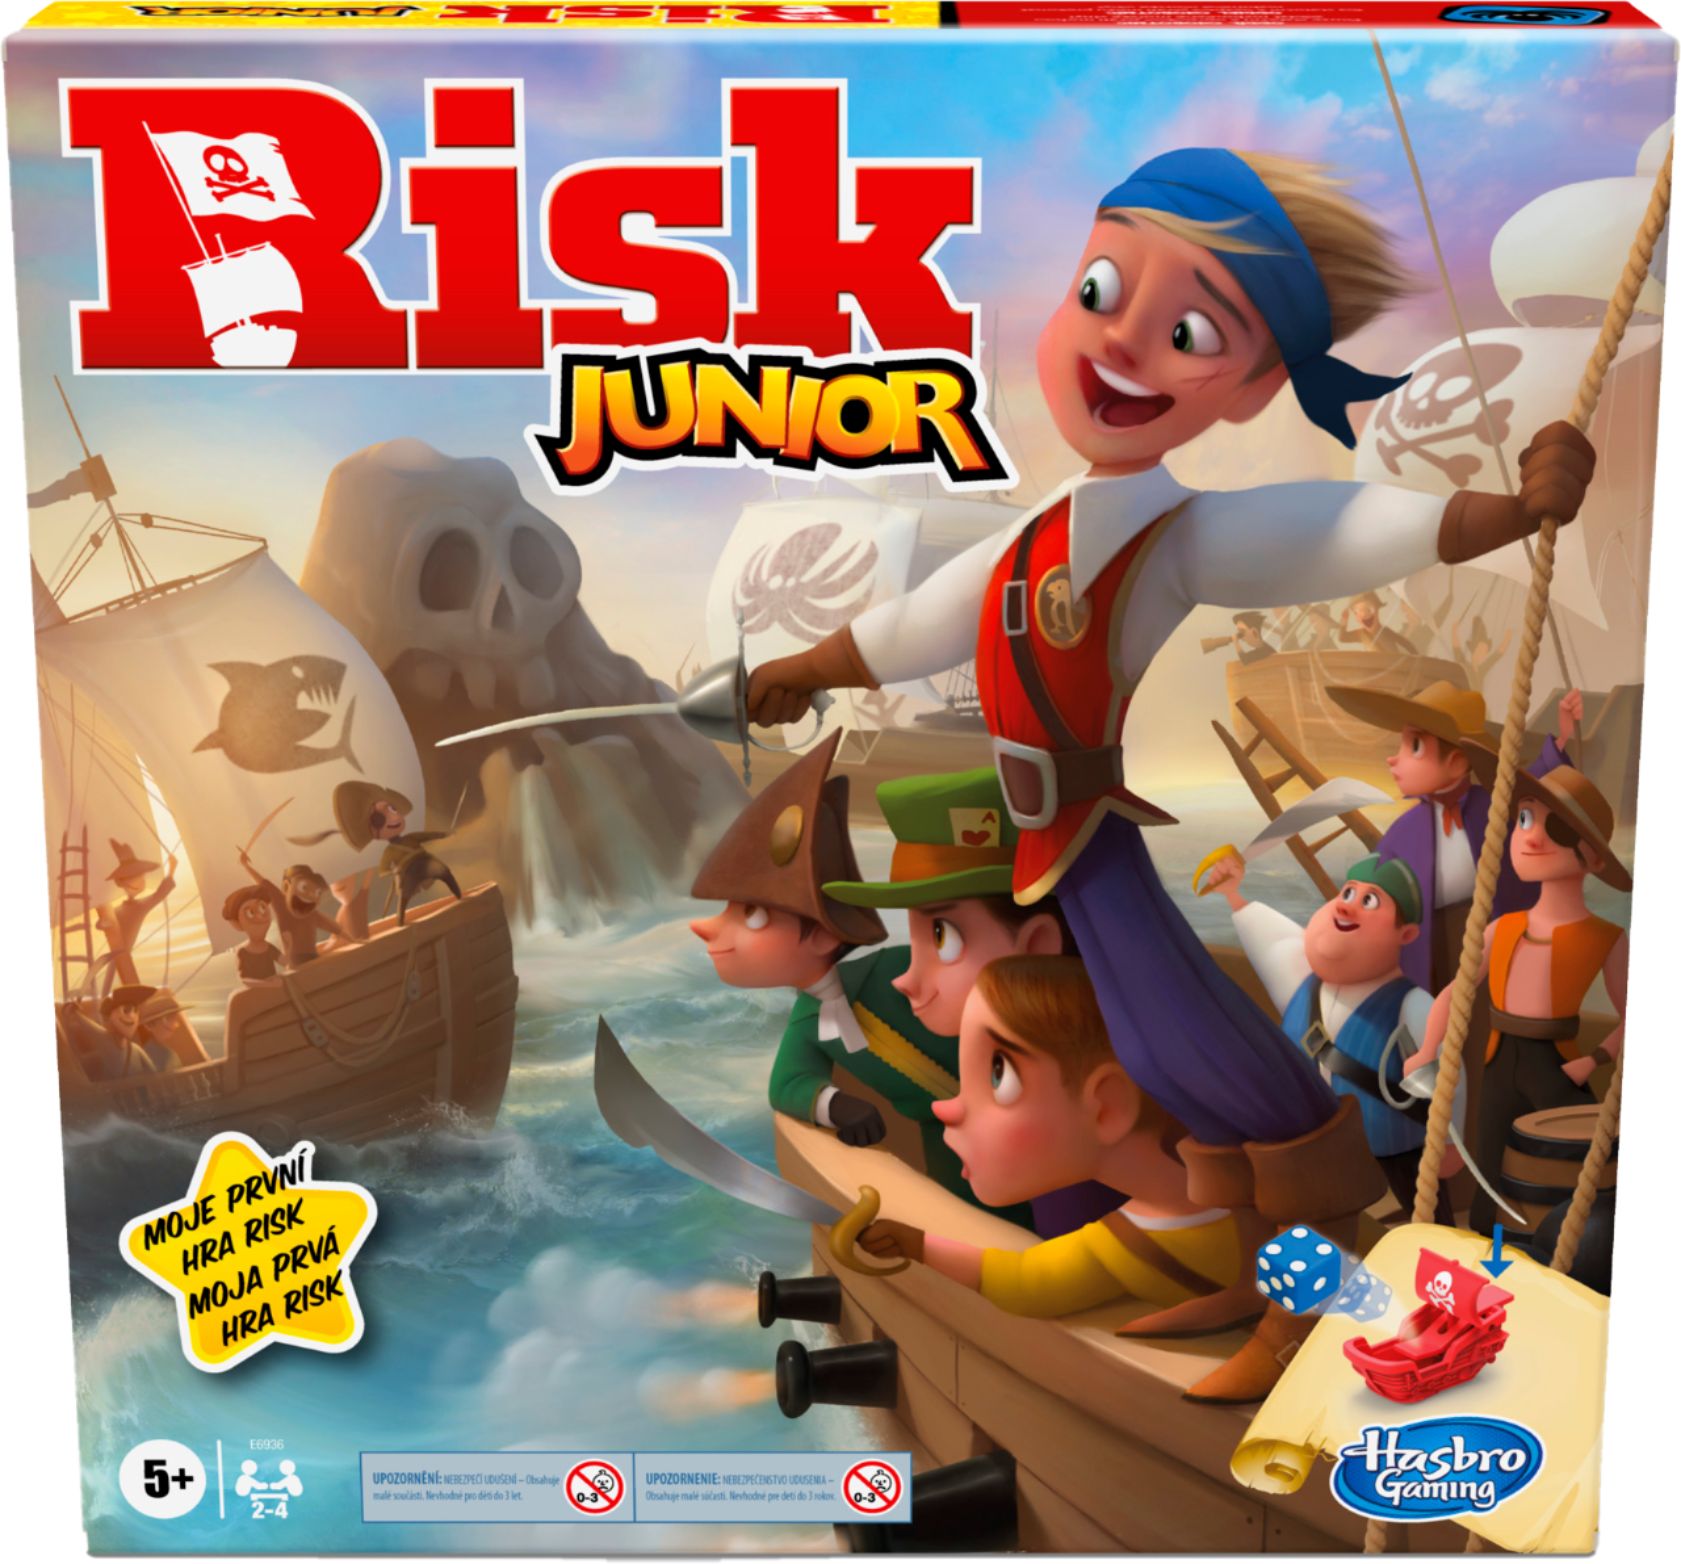 Risk Junior Hasbro Gaming Board Game E6936 for sale online